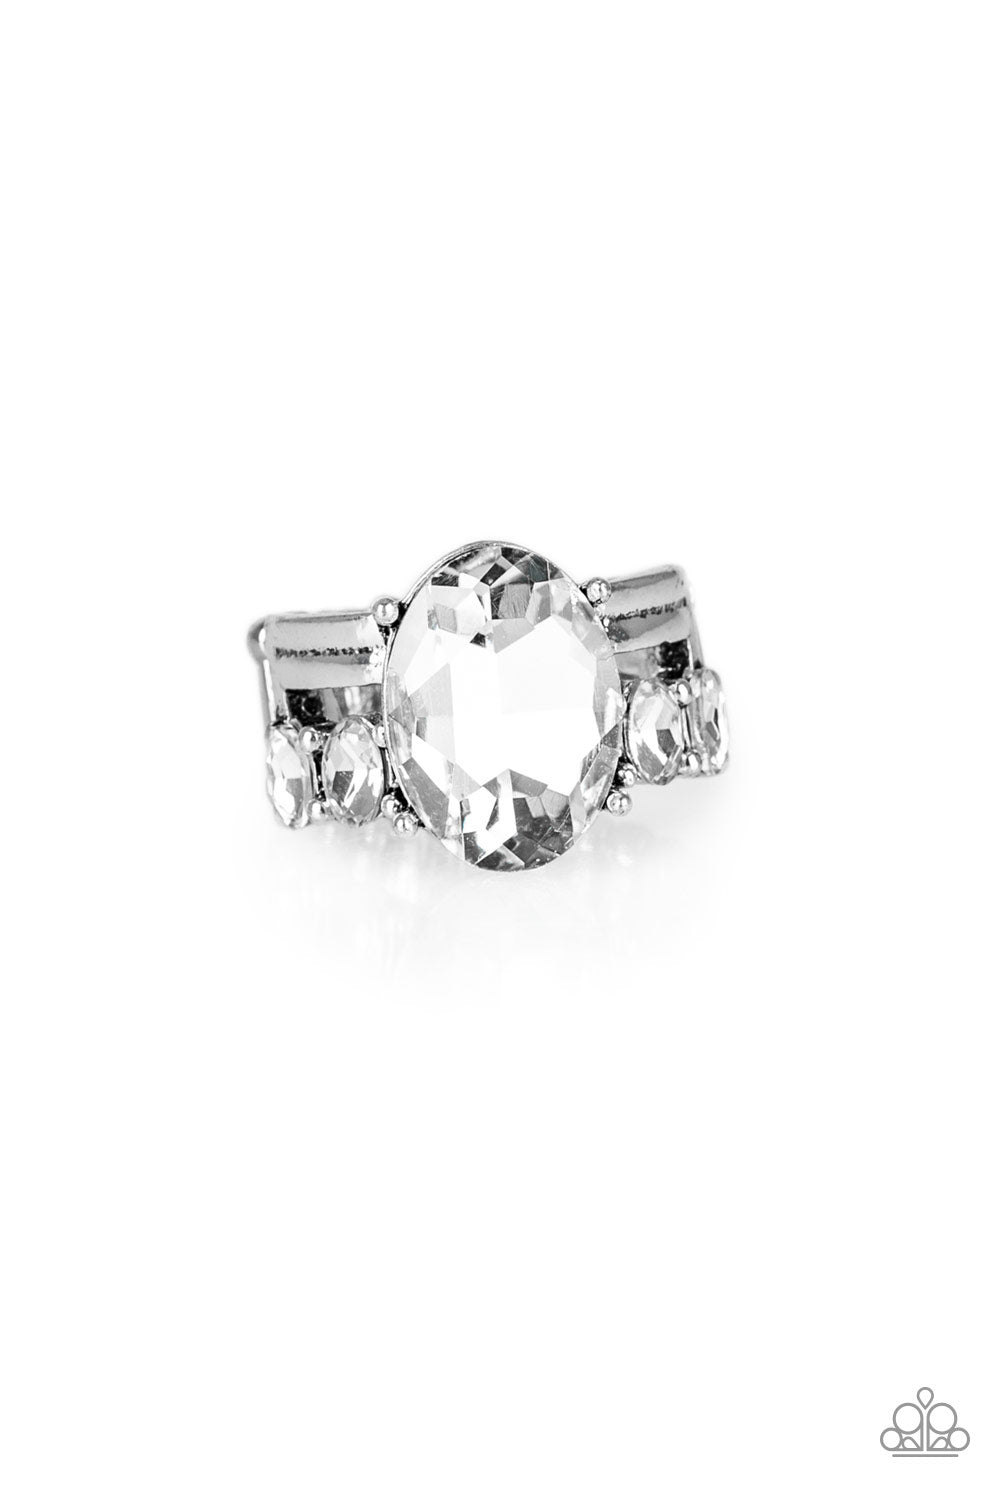 pittmanbling-and-jewelry-inc-presentsshine-bright-like-a-diamond-white-6927-paparazzi-accessories